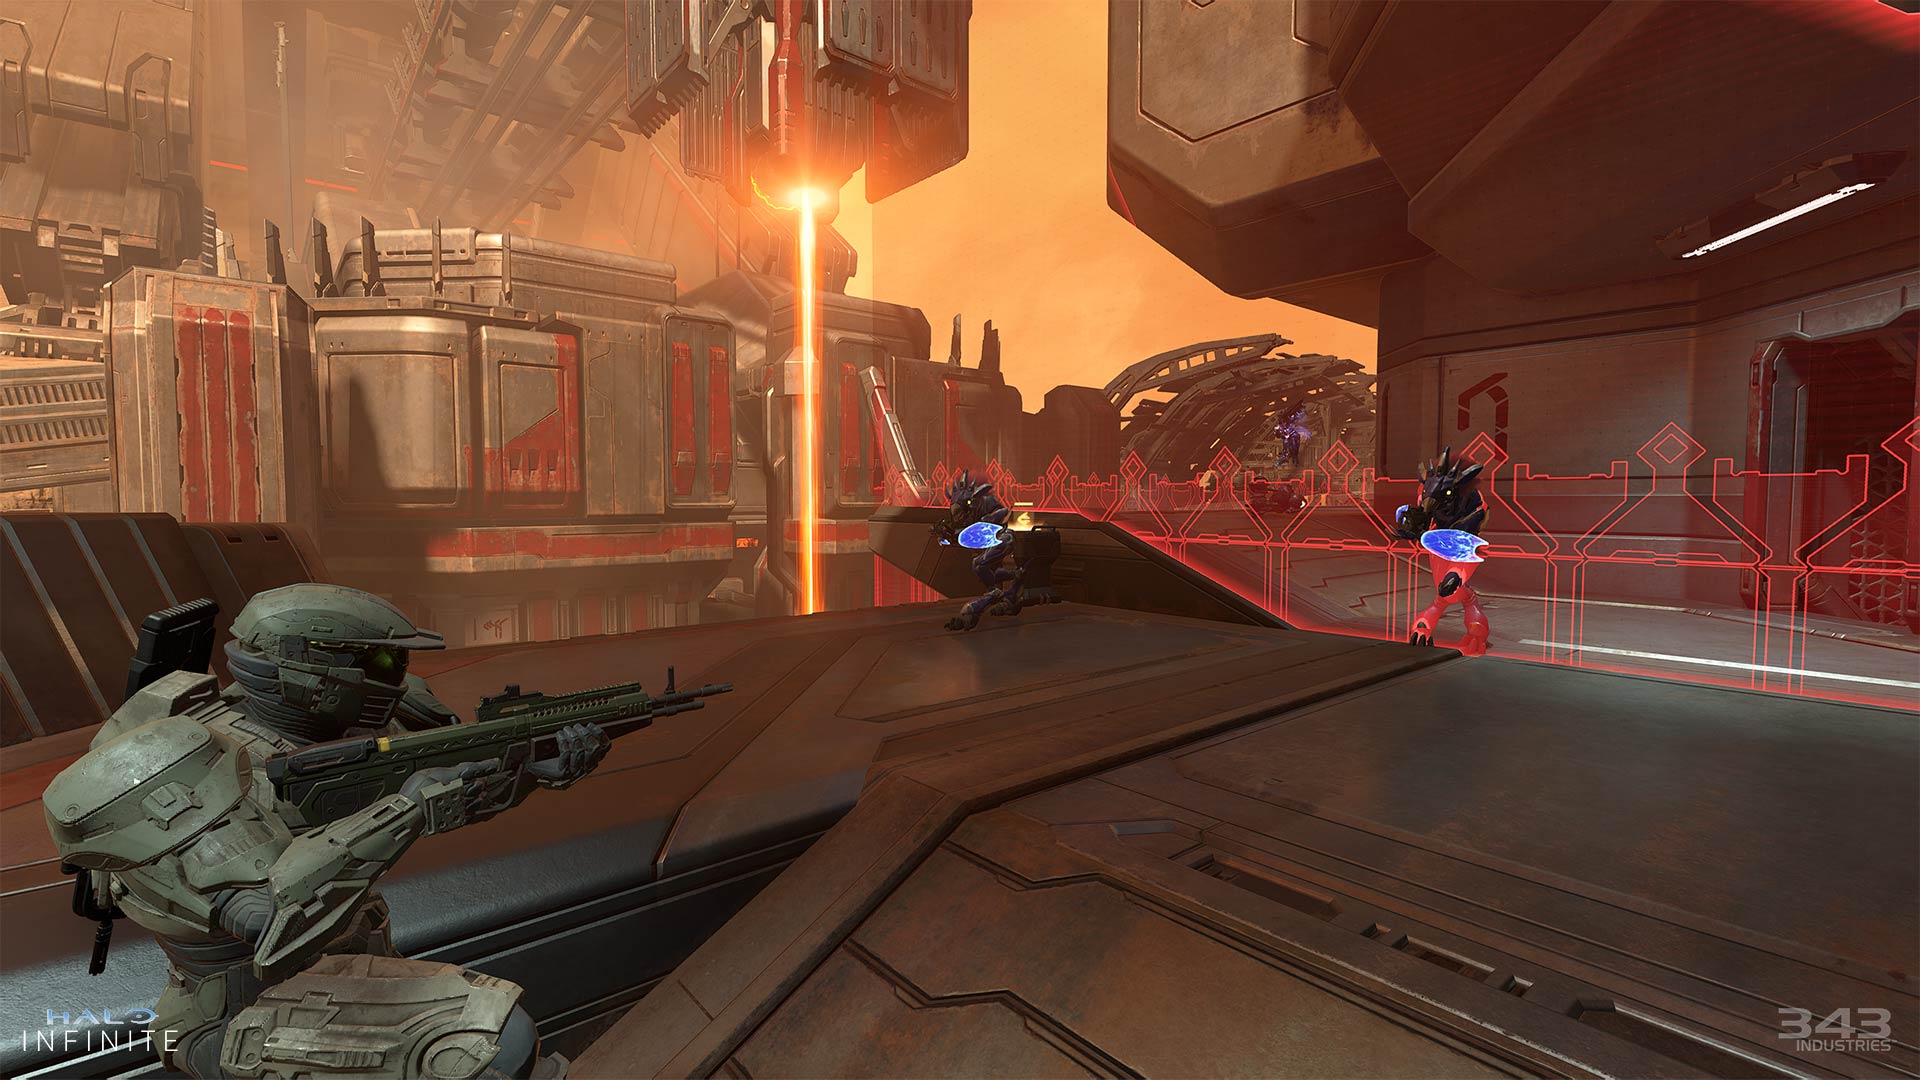 Breaker for Firefight: King of the Hill in Halo Infinite